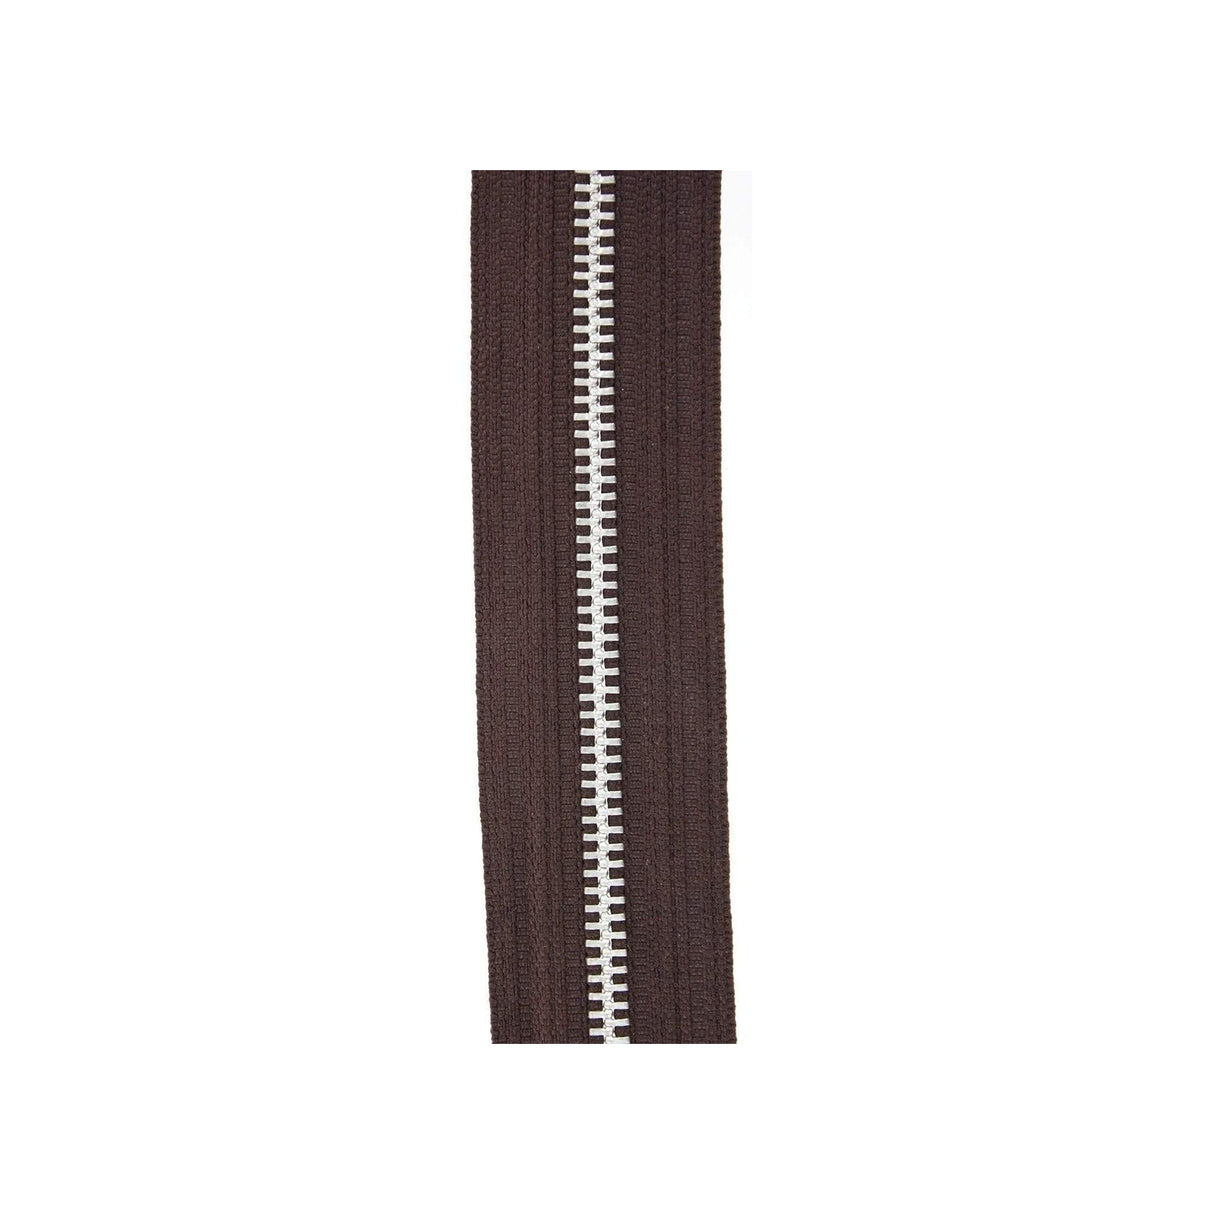 #5 Brown, YKK Metal Chain Zipper Tape with Aluminum Teeth, #5M-BRO-ALUM